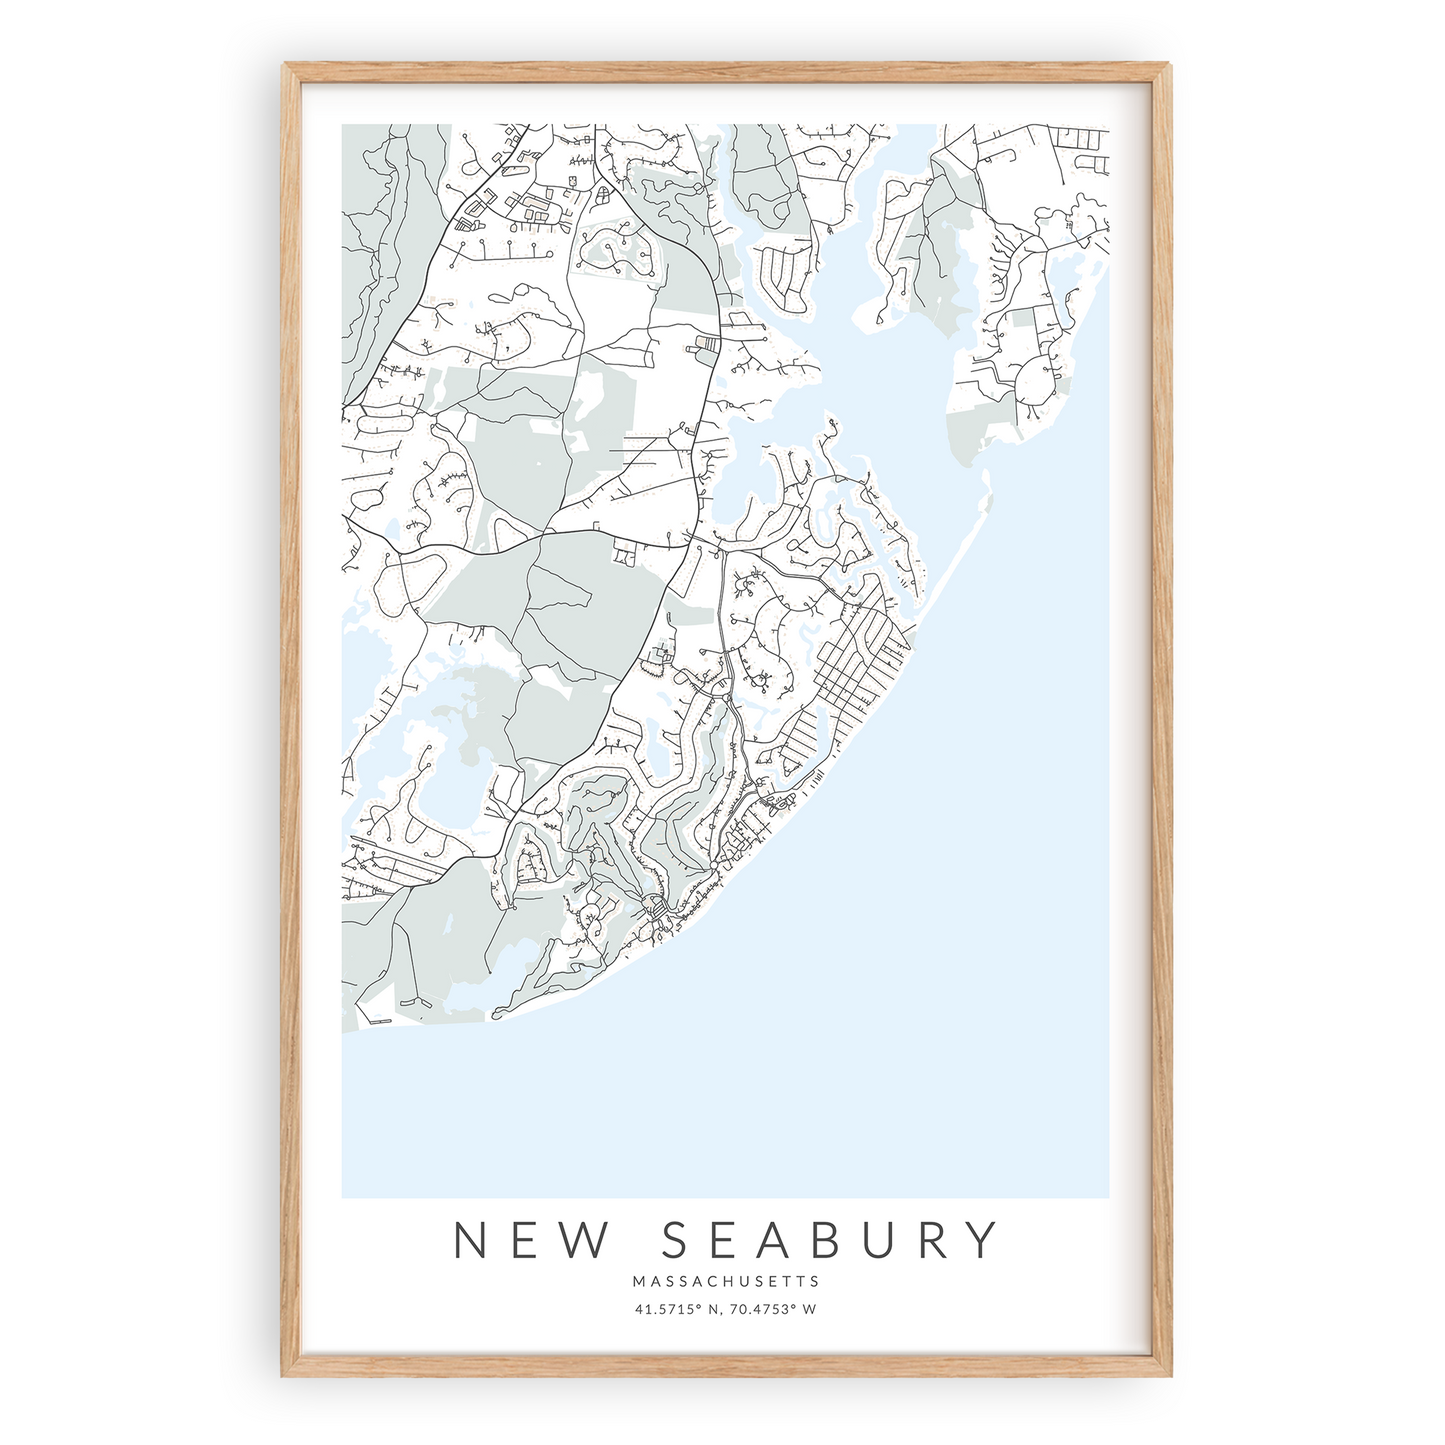 new seabury massachusetts map print in wood frame